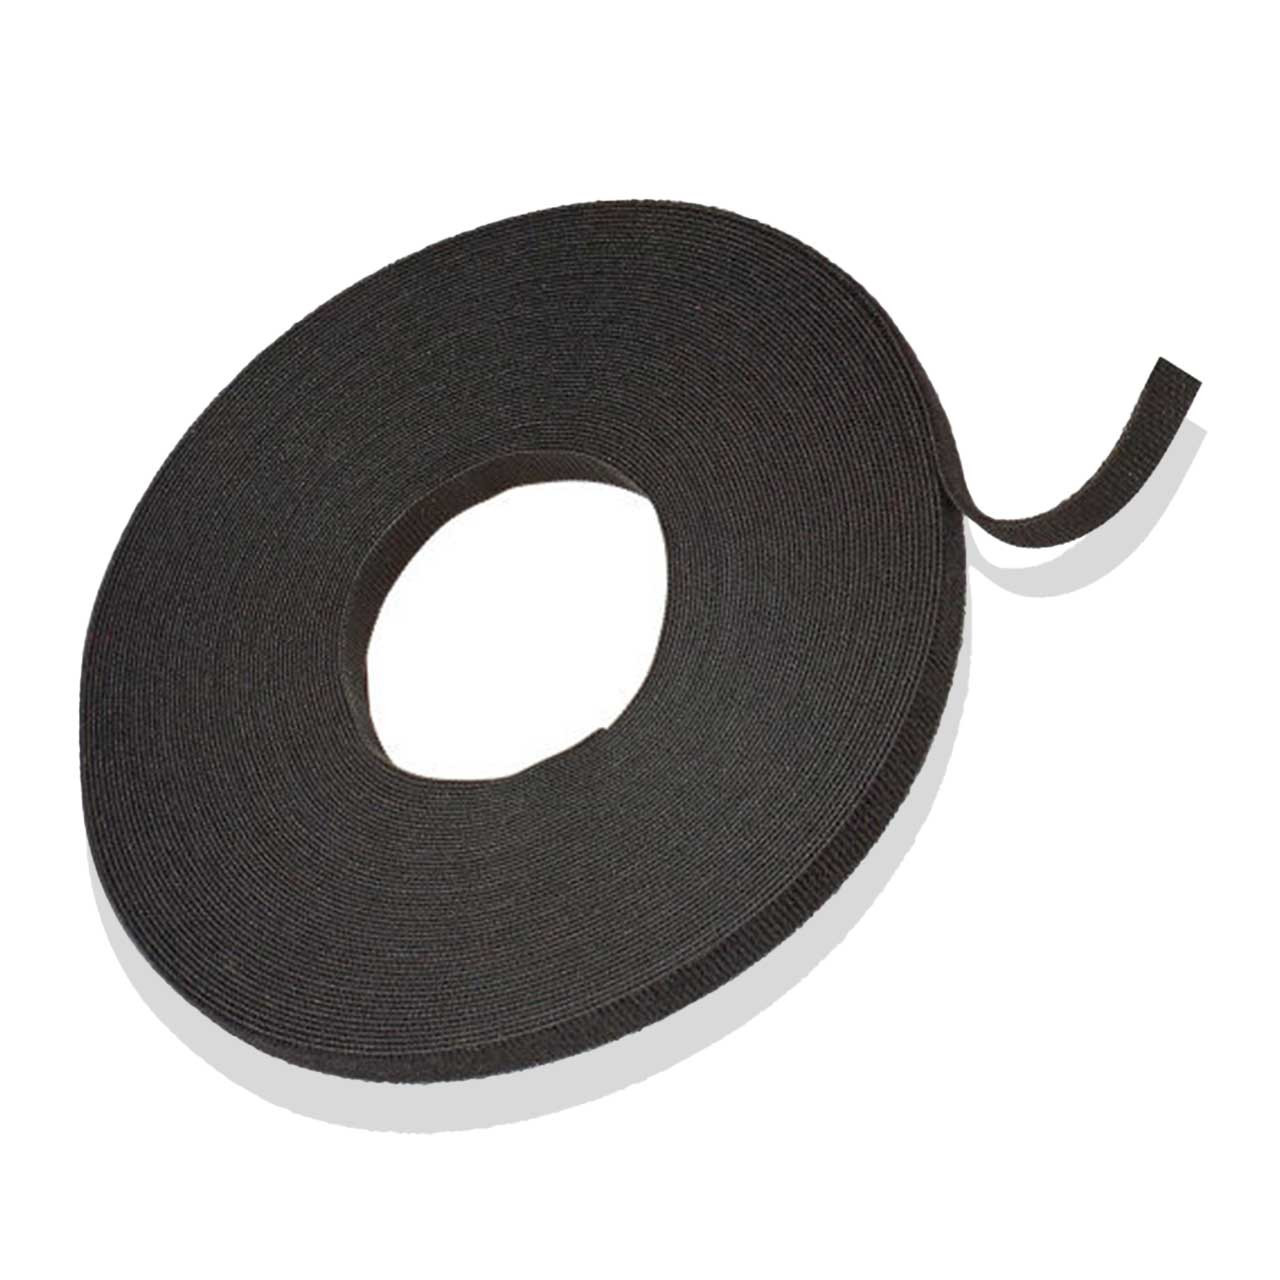 VELCRO® Brand - 1 Black Loop: Pressure Sensitive Adhesive - Rubber